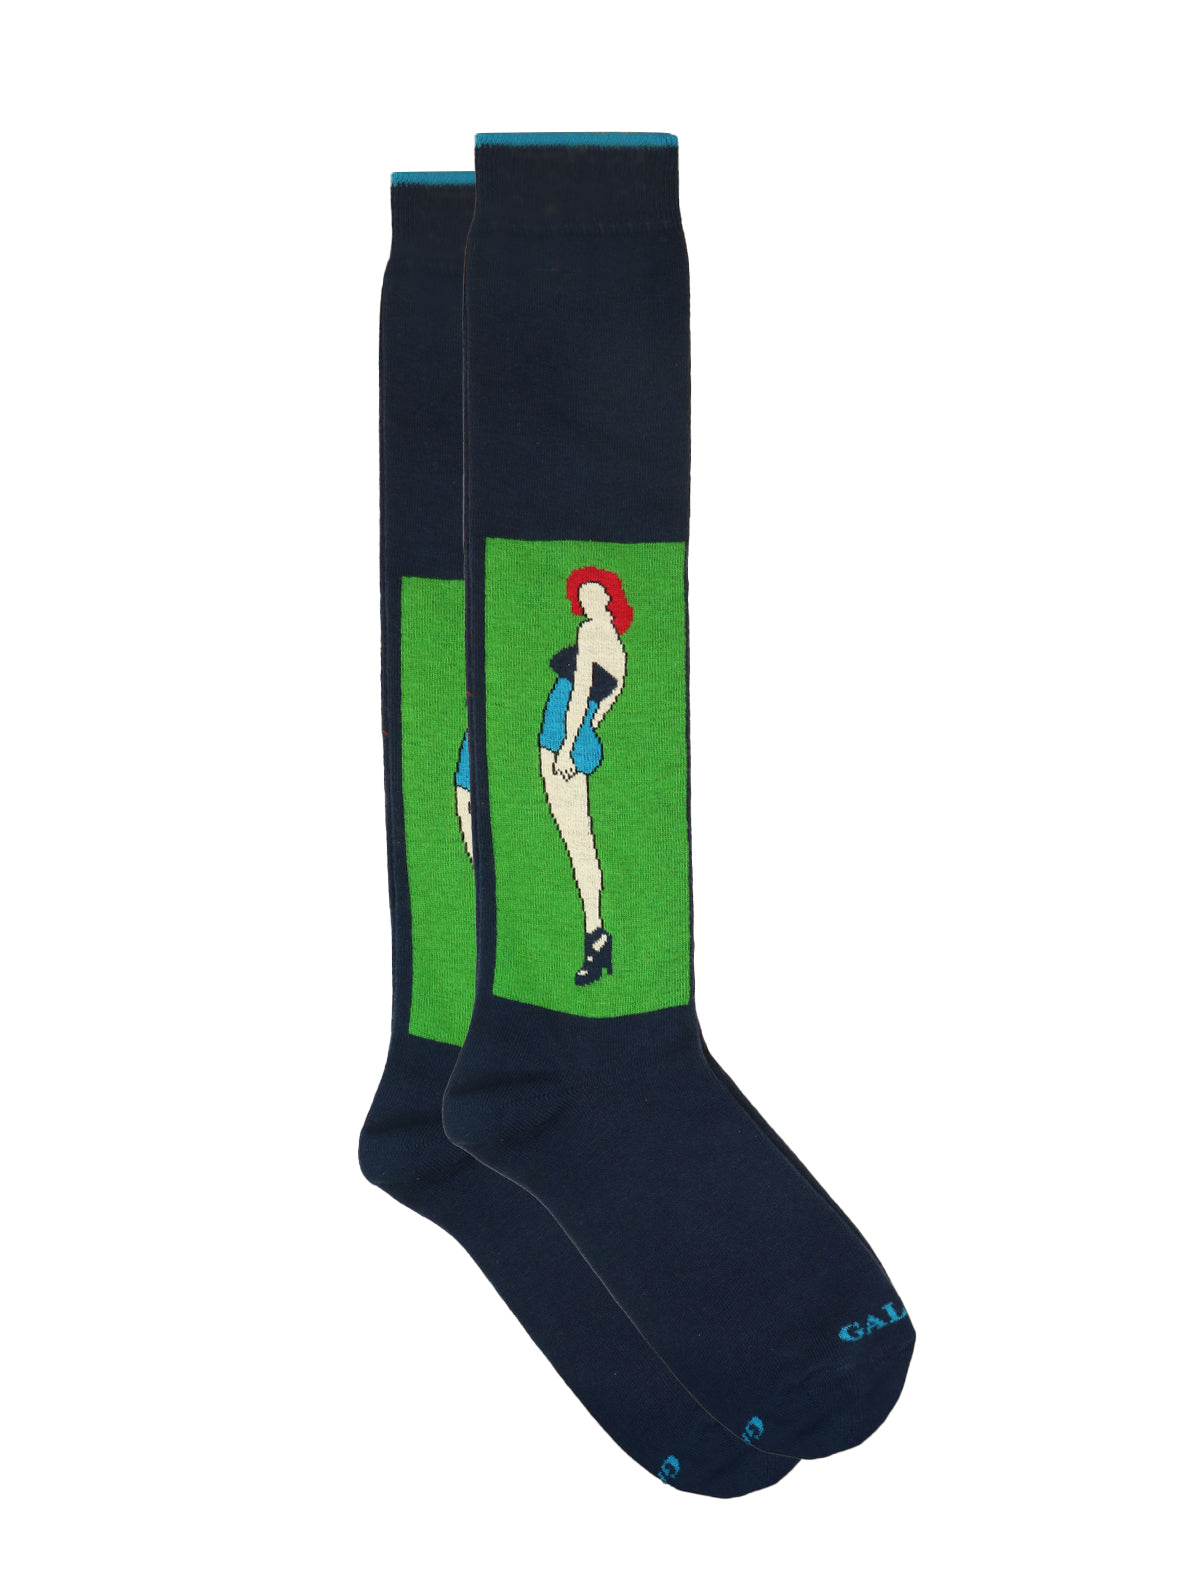 Gallo Long Socks w/ Green Abstract Character Print